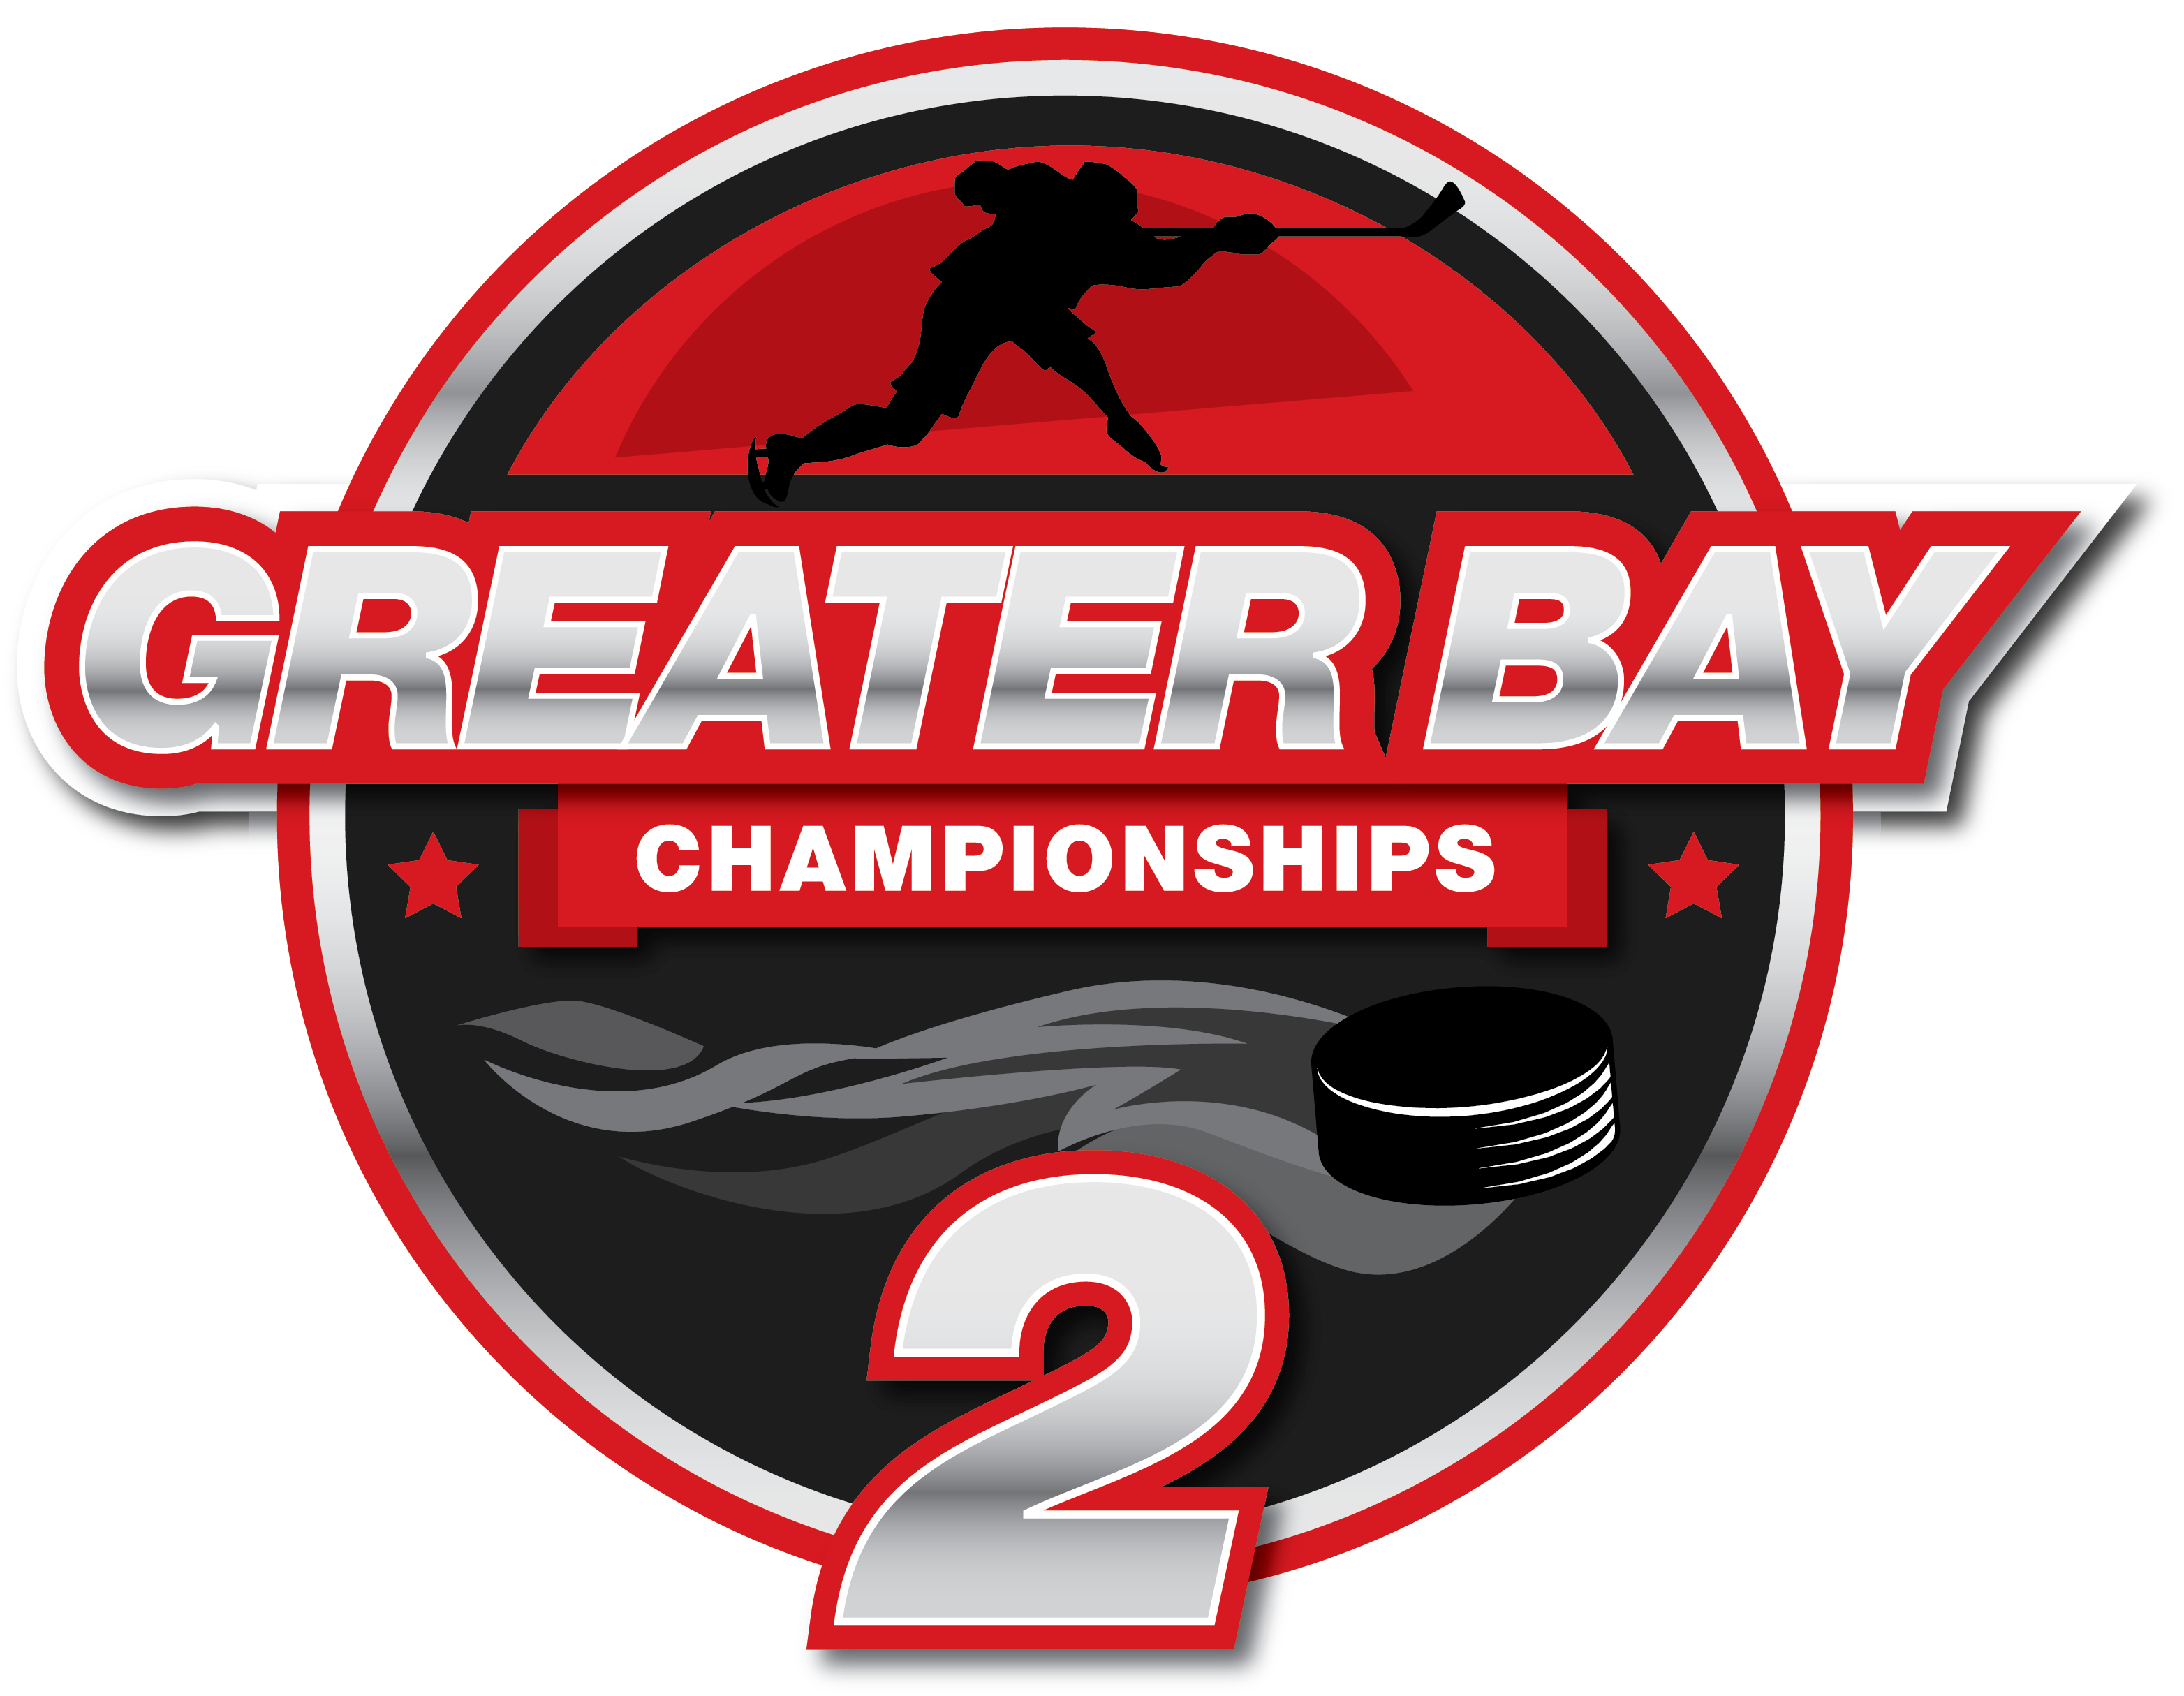 Greaterbay Championship